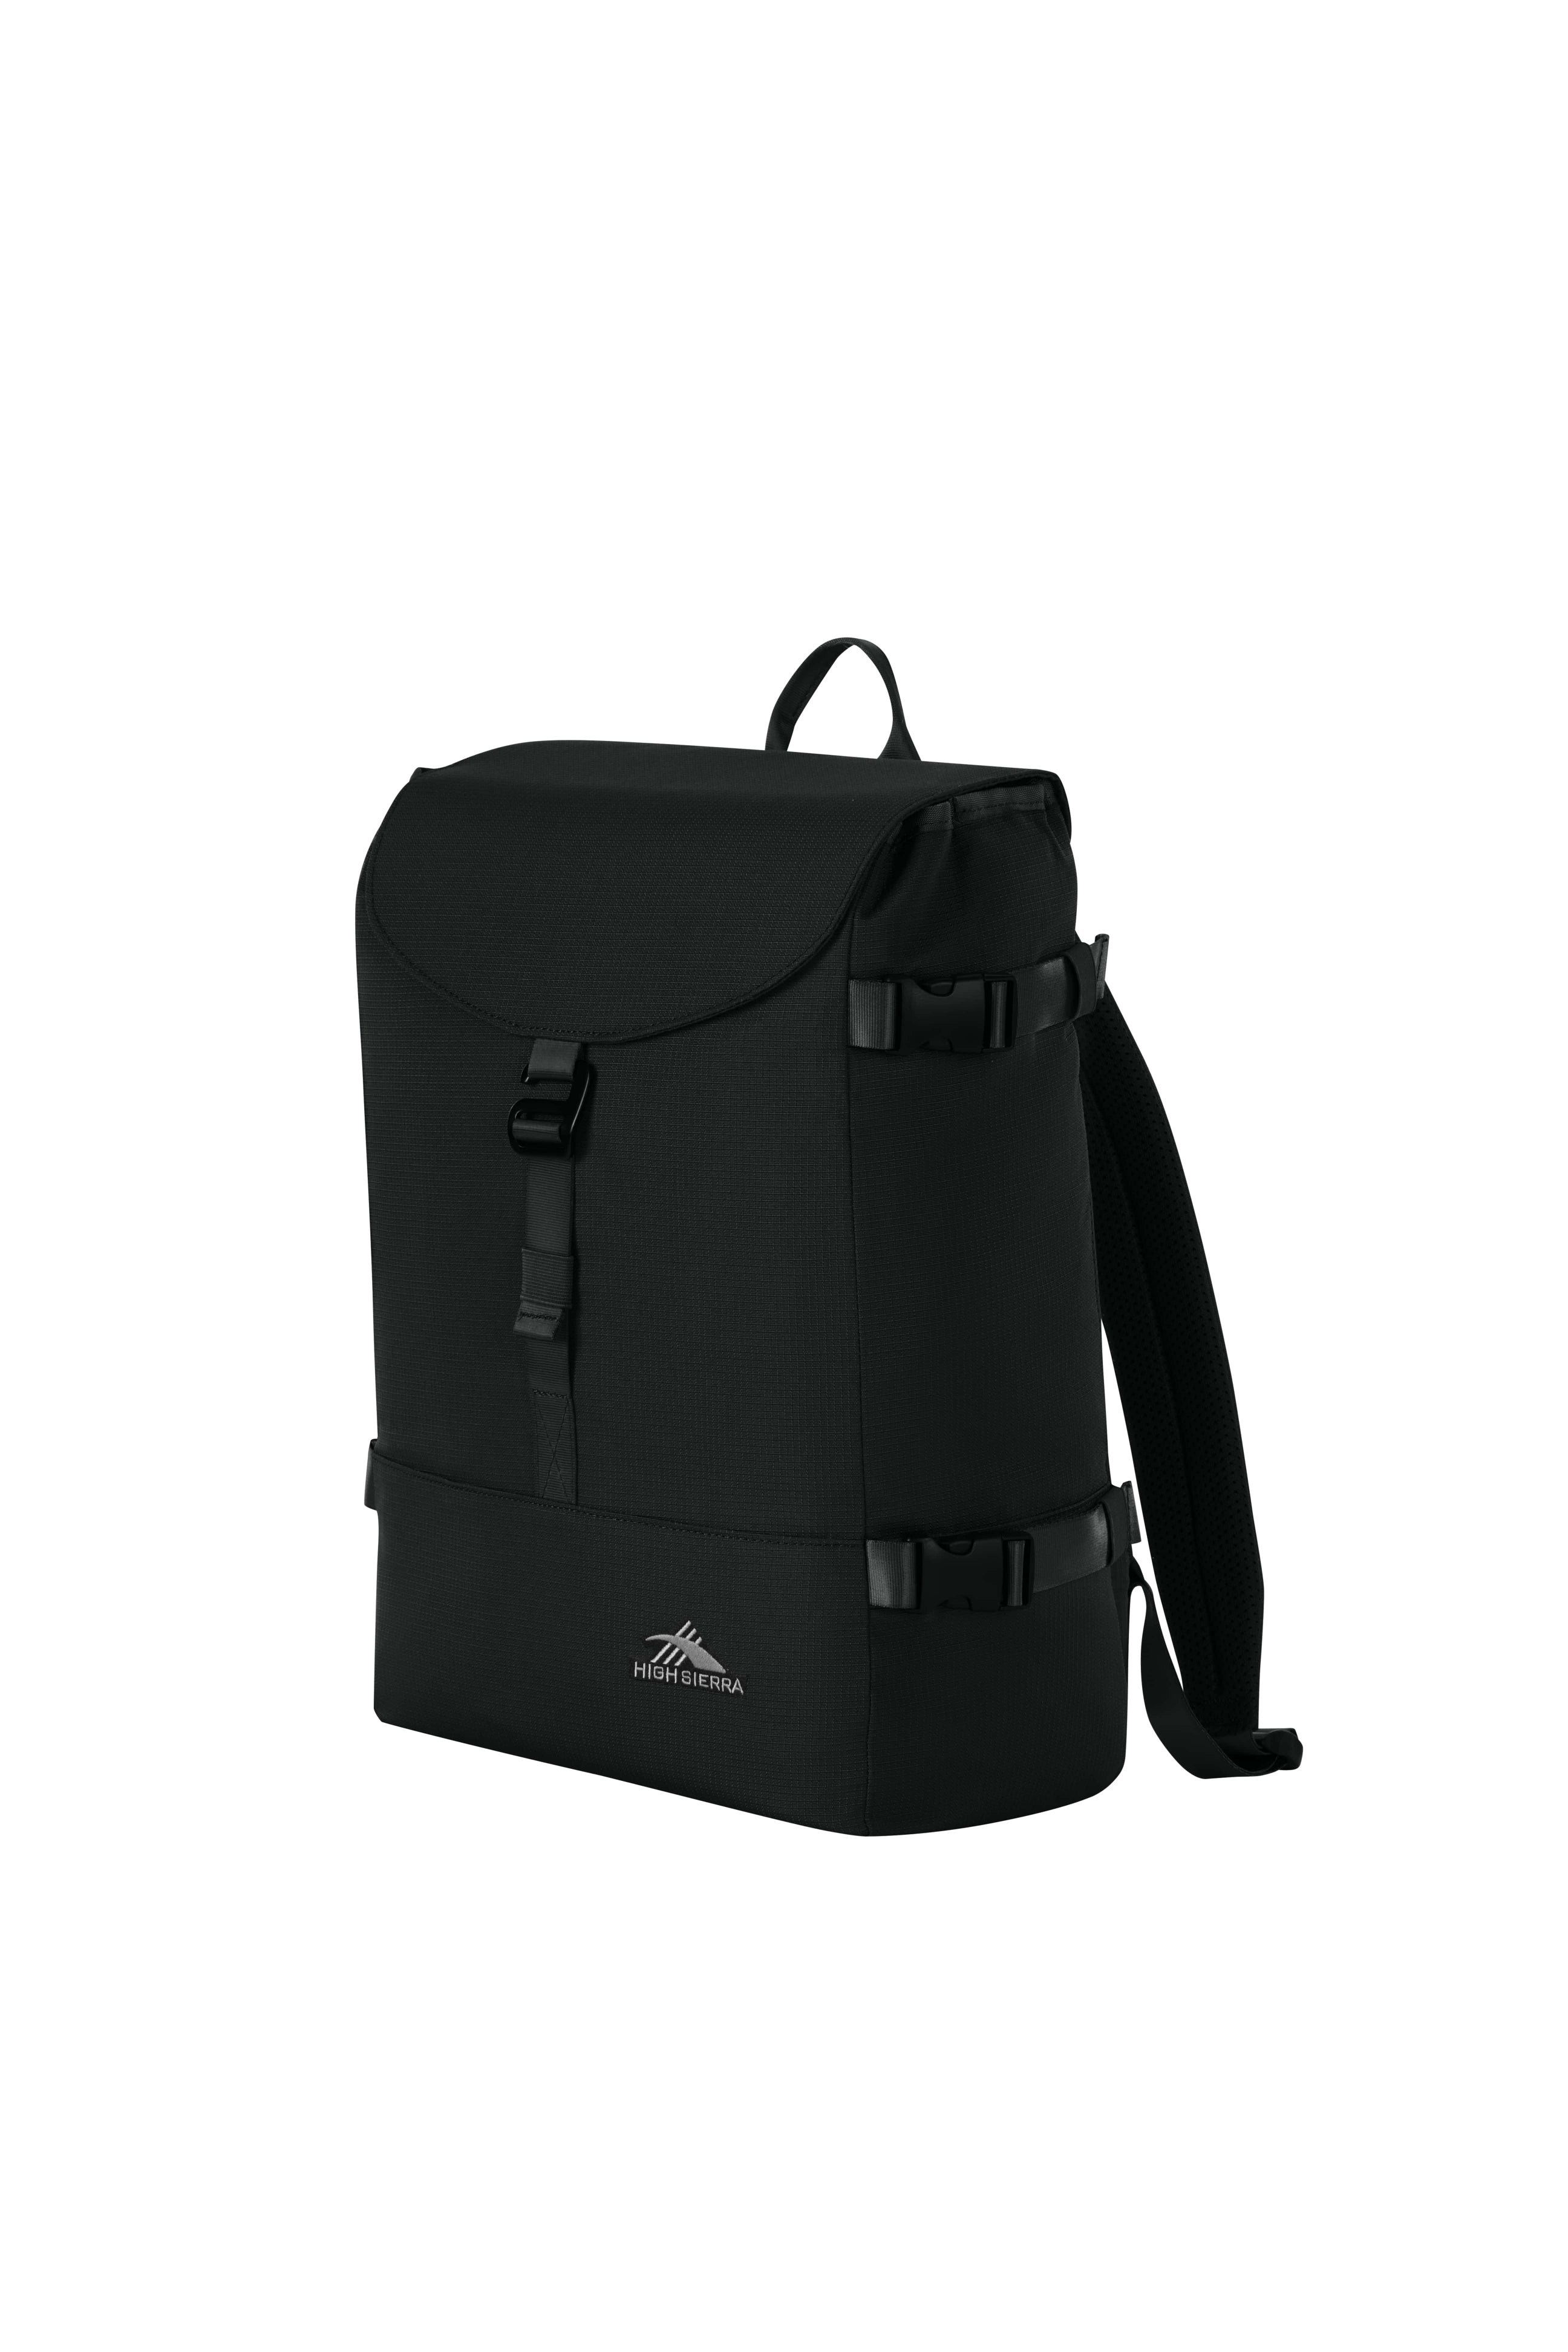 High Sierra - Camille 20L 15.6in Laptop backpack - Black-2